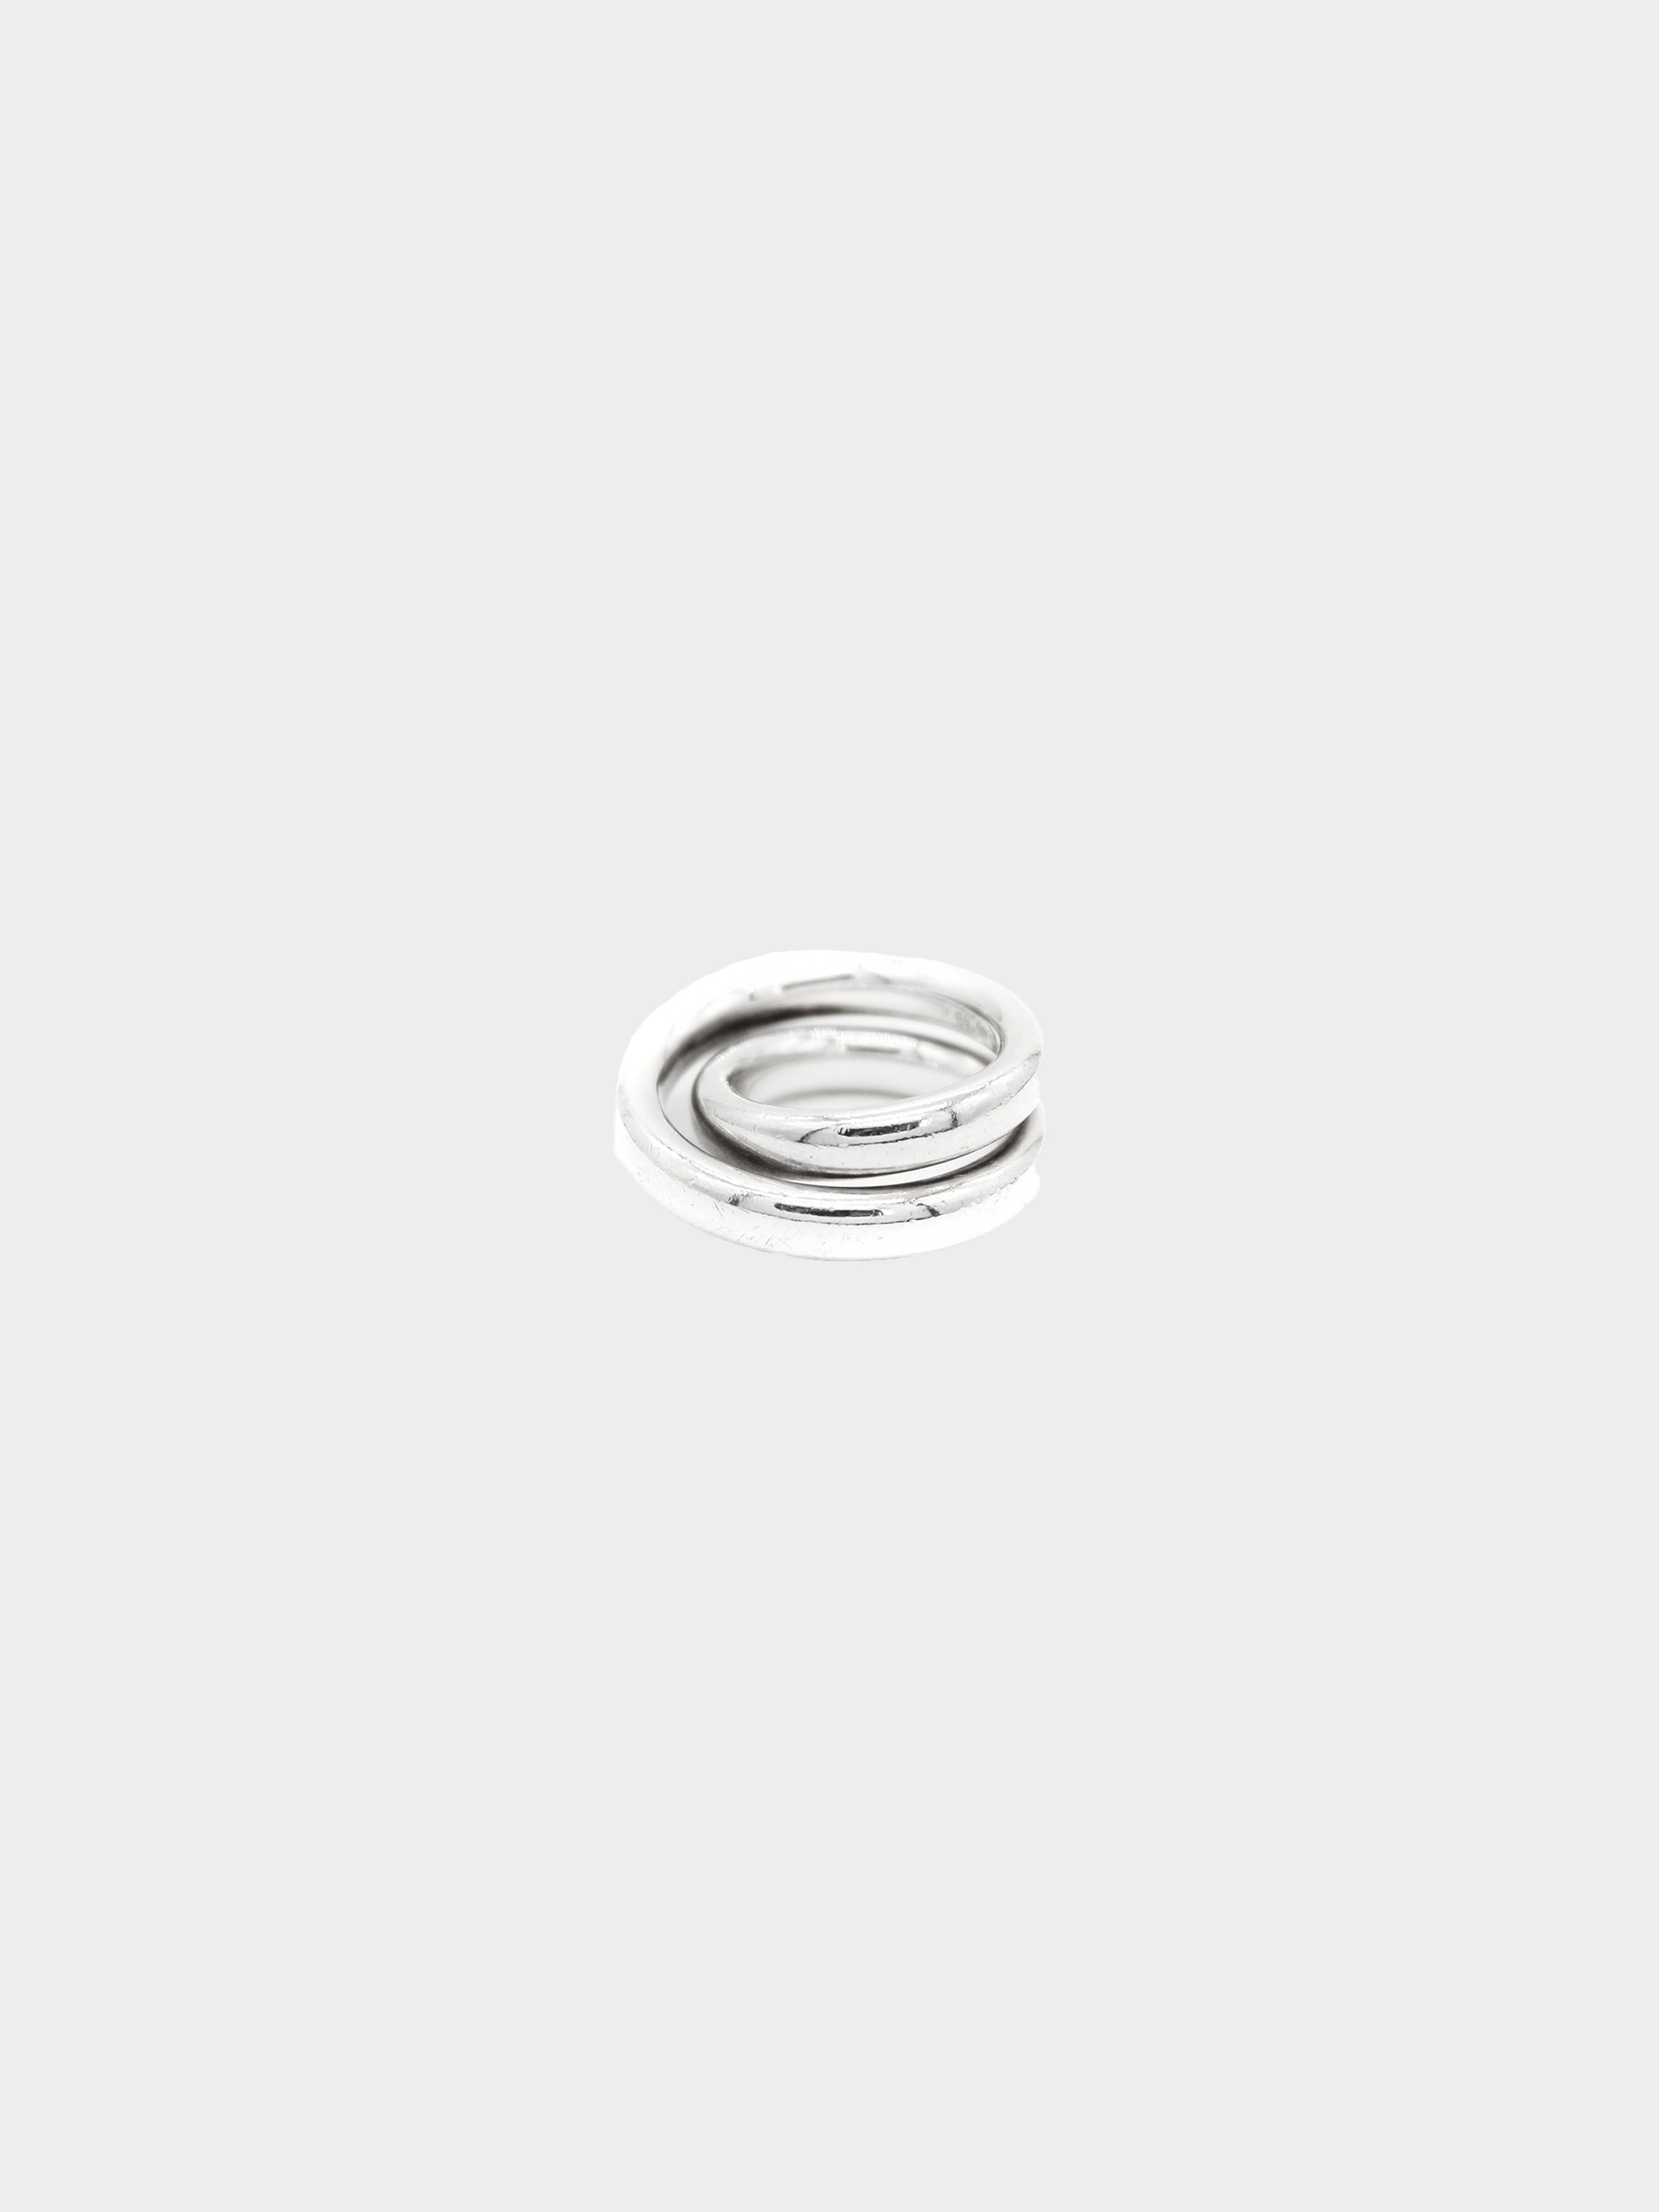 Hermès 2000s Silver Vertige Ring